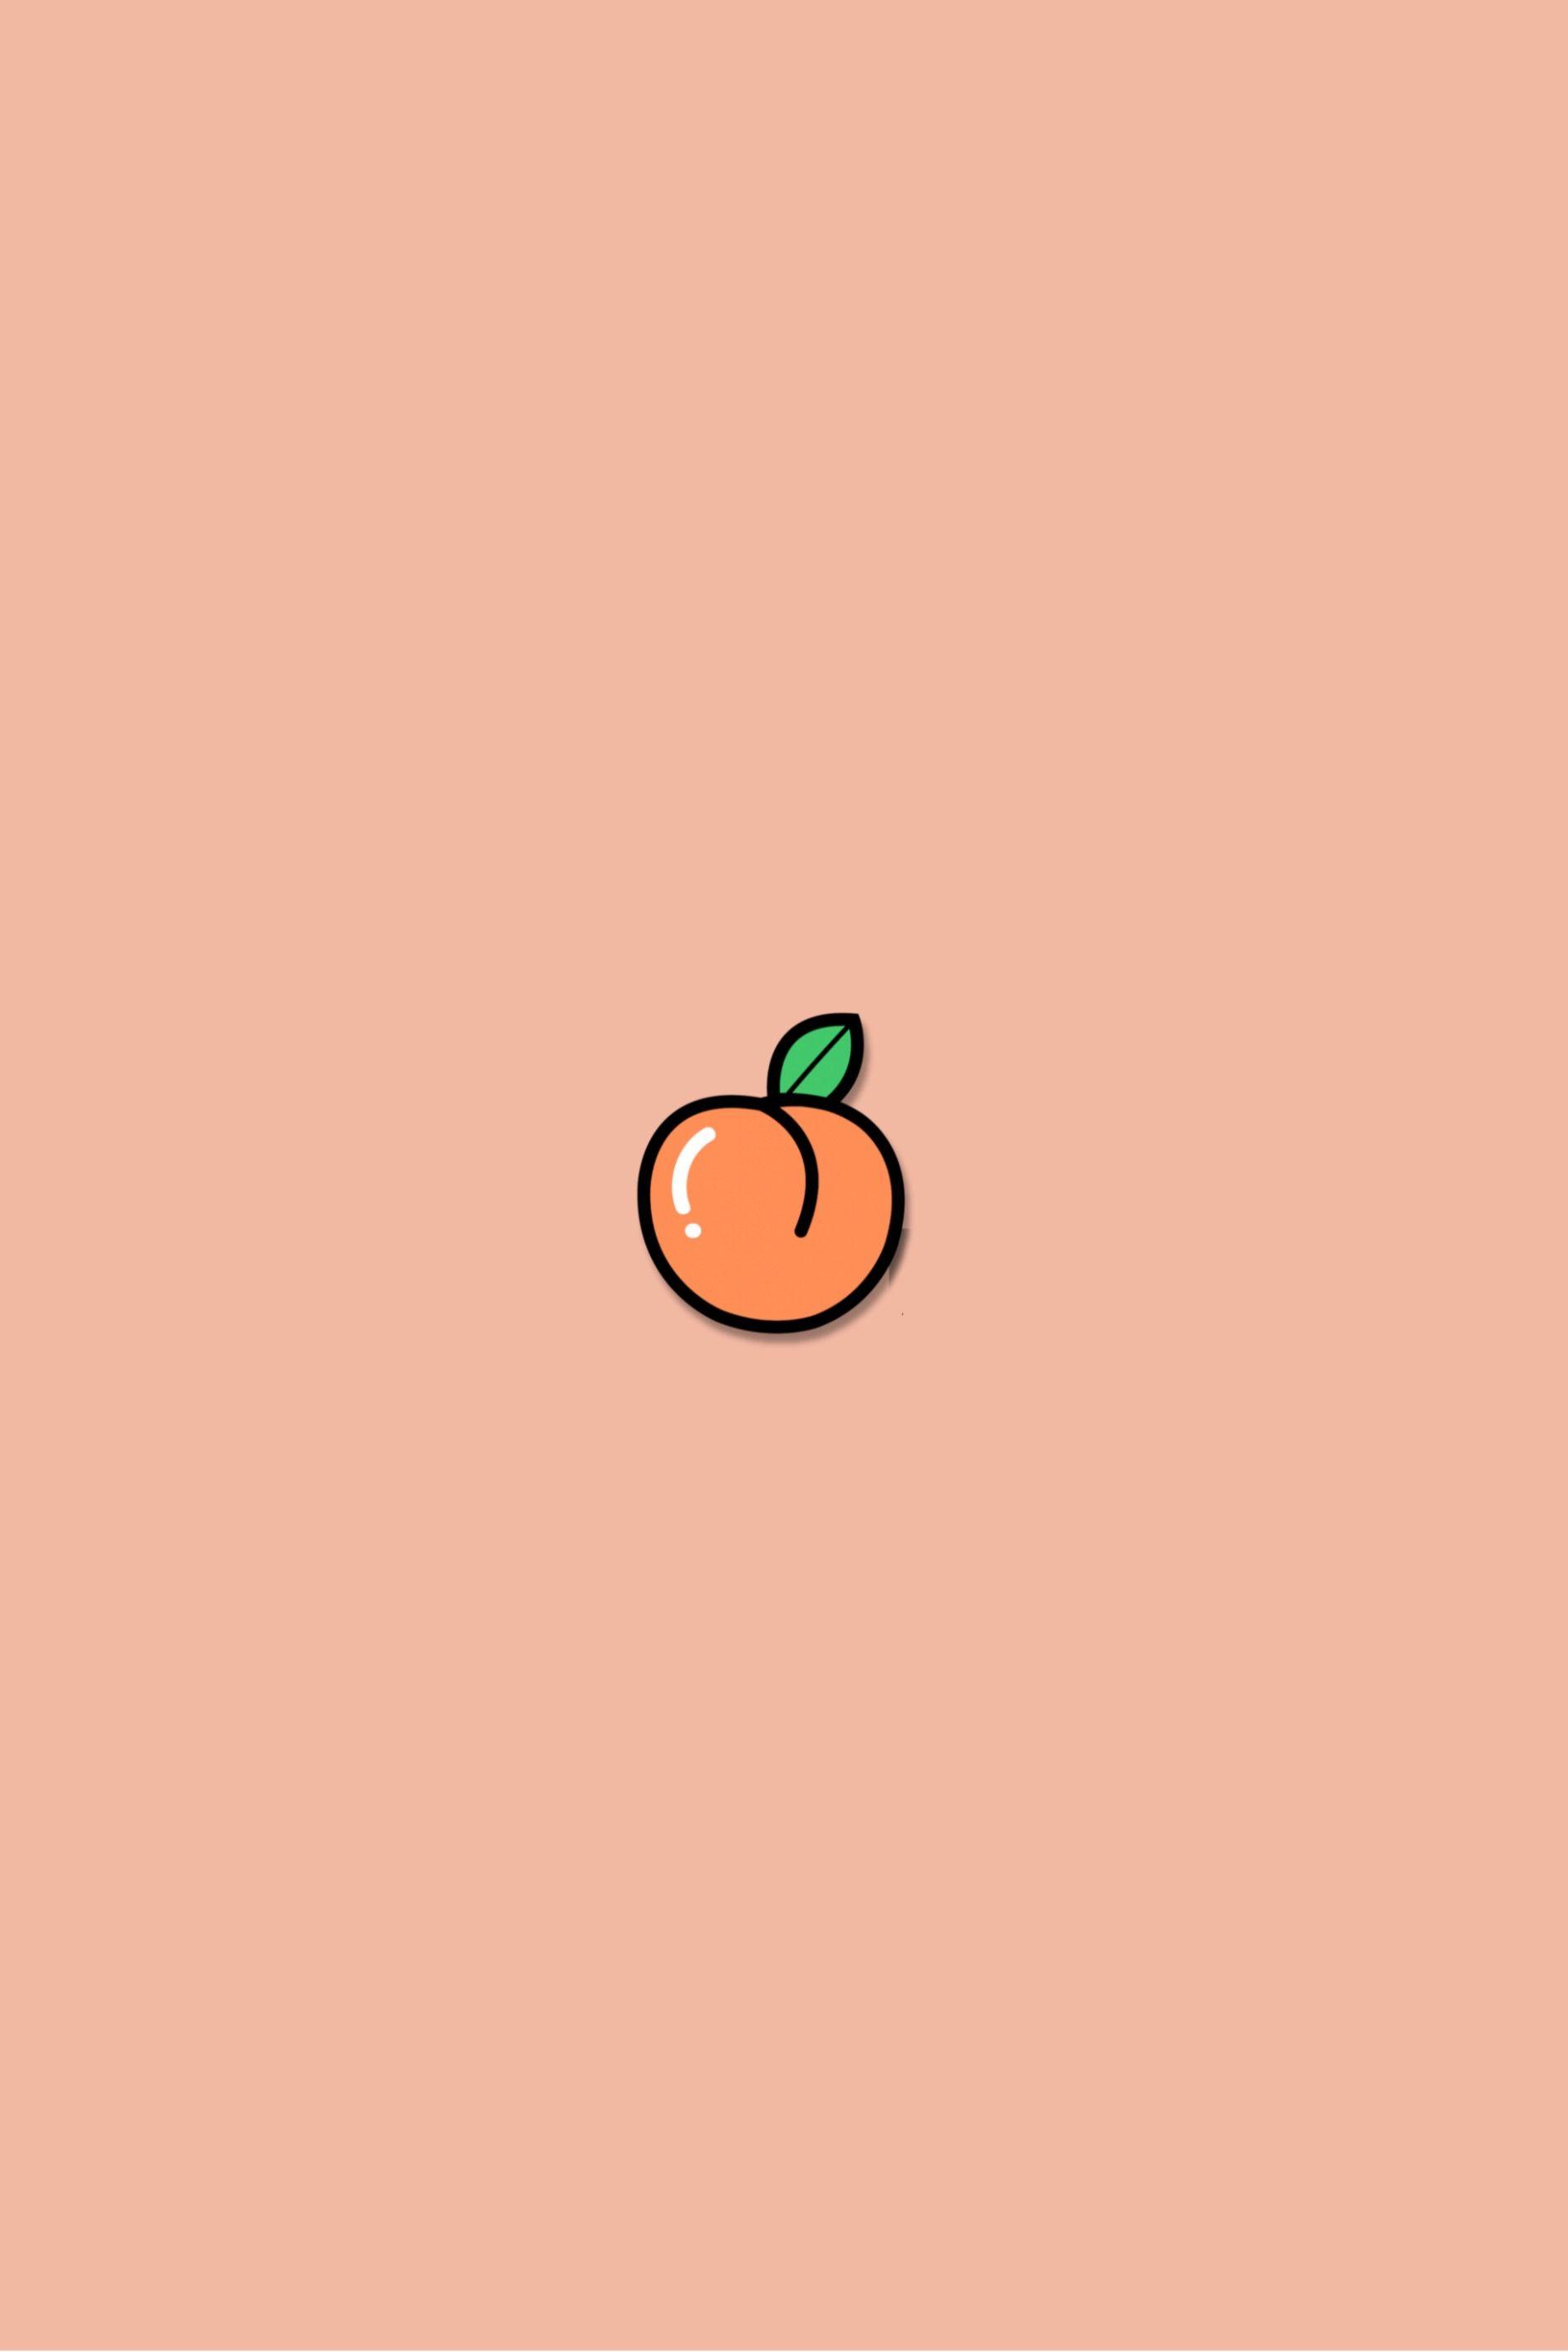 Cute Peach Wallpapers - Top Free Cute Peach Backgrounds - WallpaperAccess